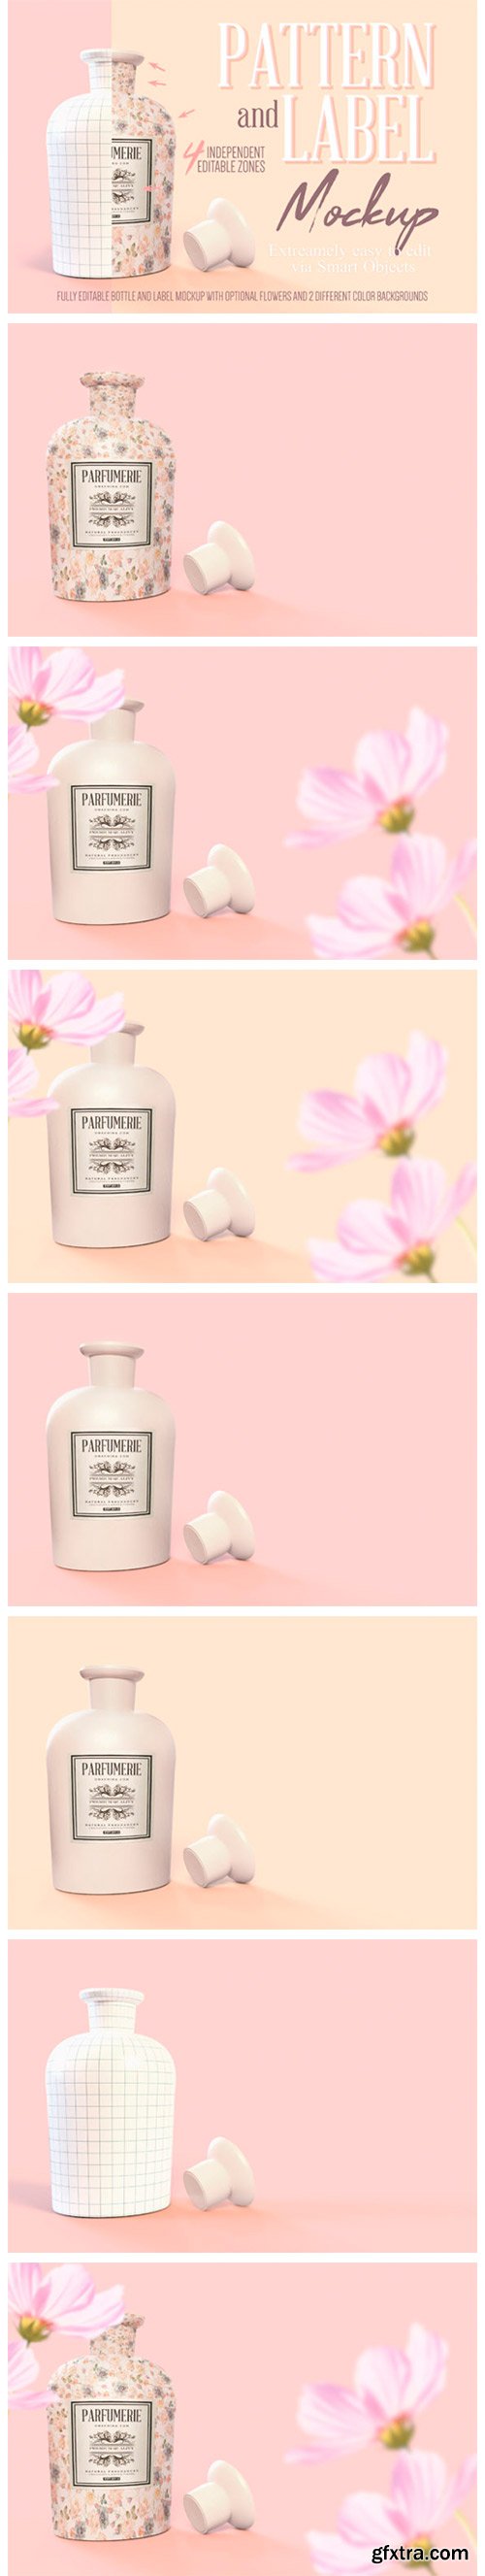 Pattern&Label Parfum Bottle Mockup 3102195